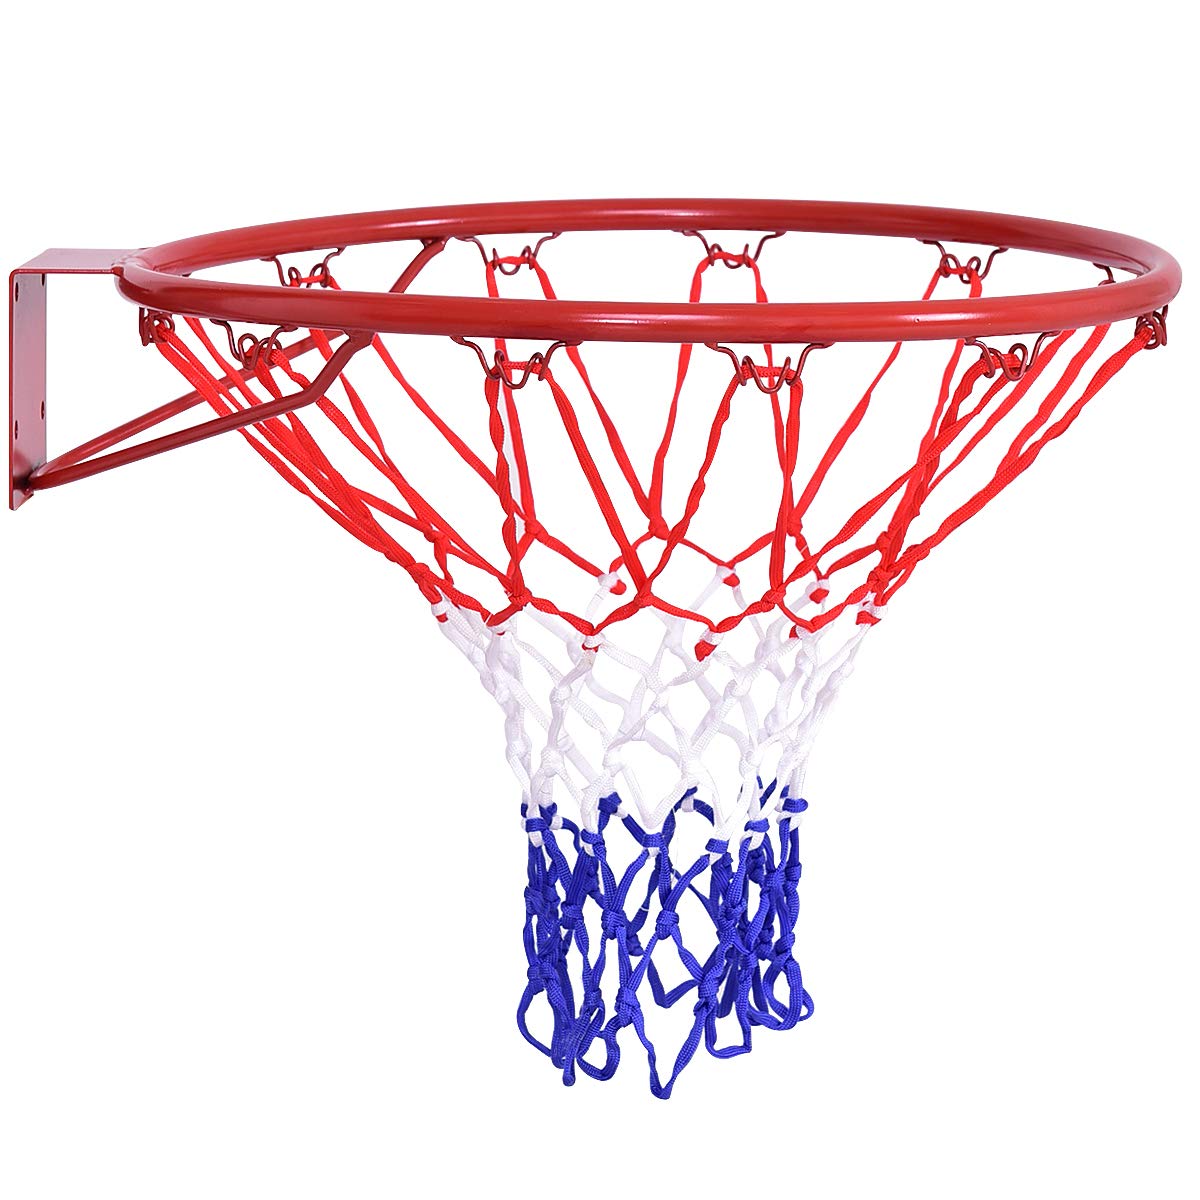 16mm Basketball Rim, Basketball Net - GoplusUS